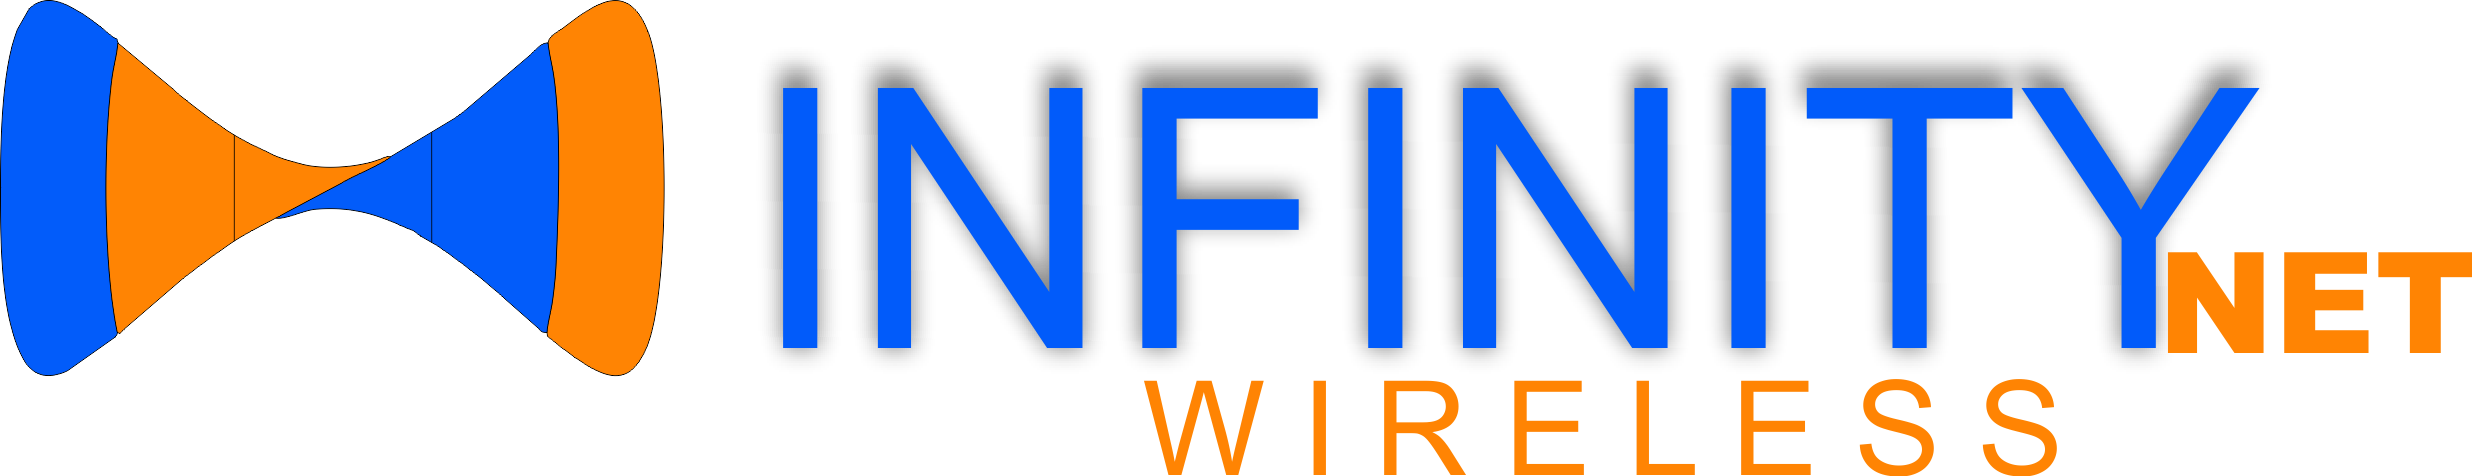 InfinityNet Wireless PR